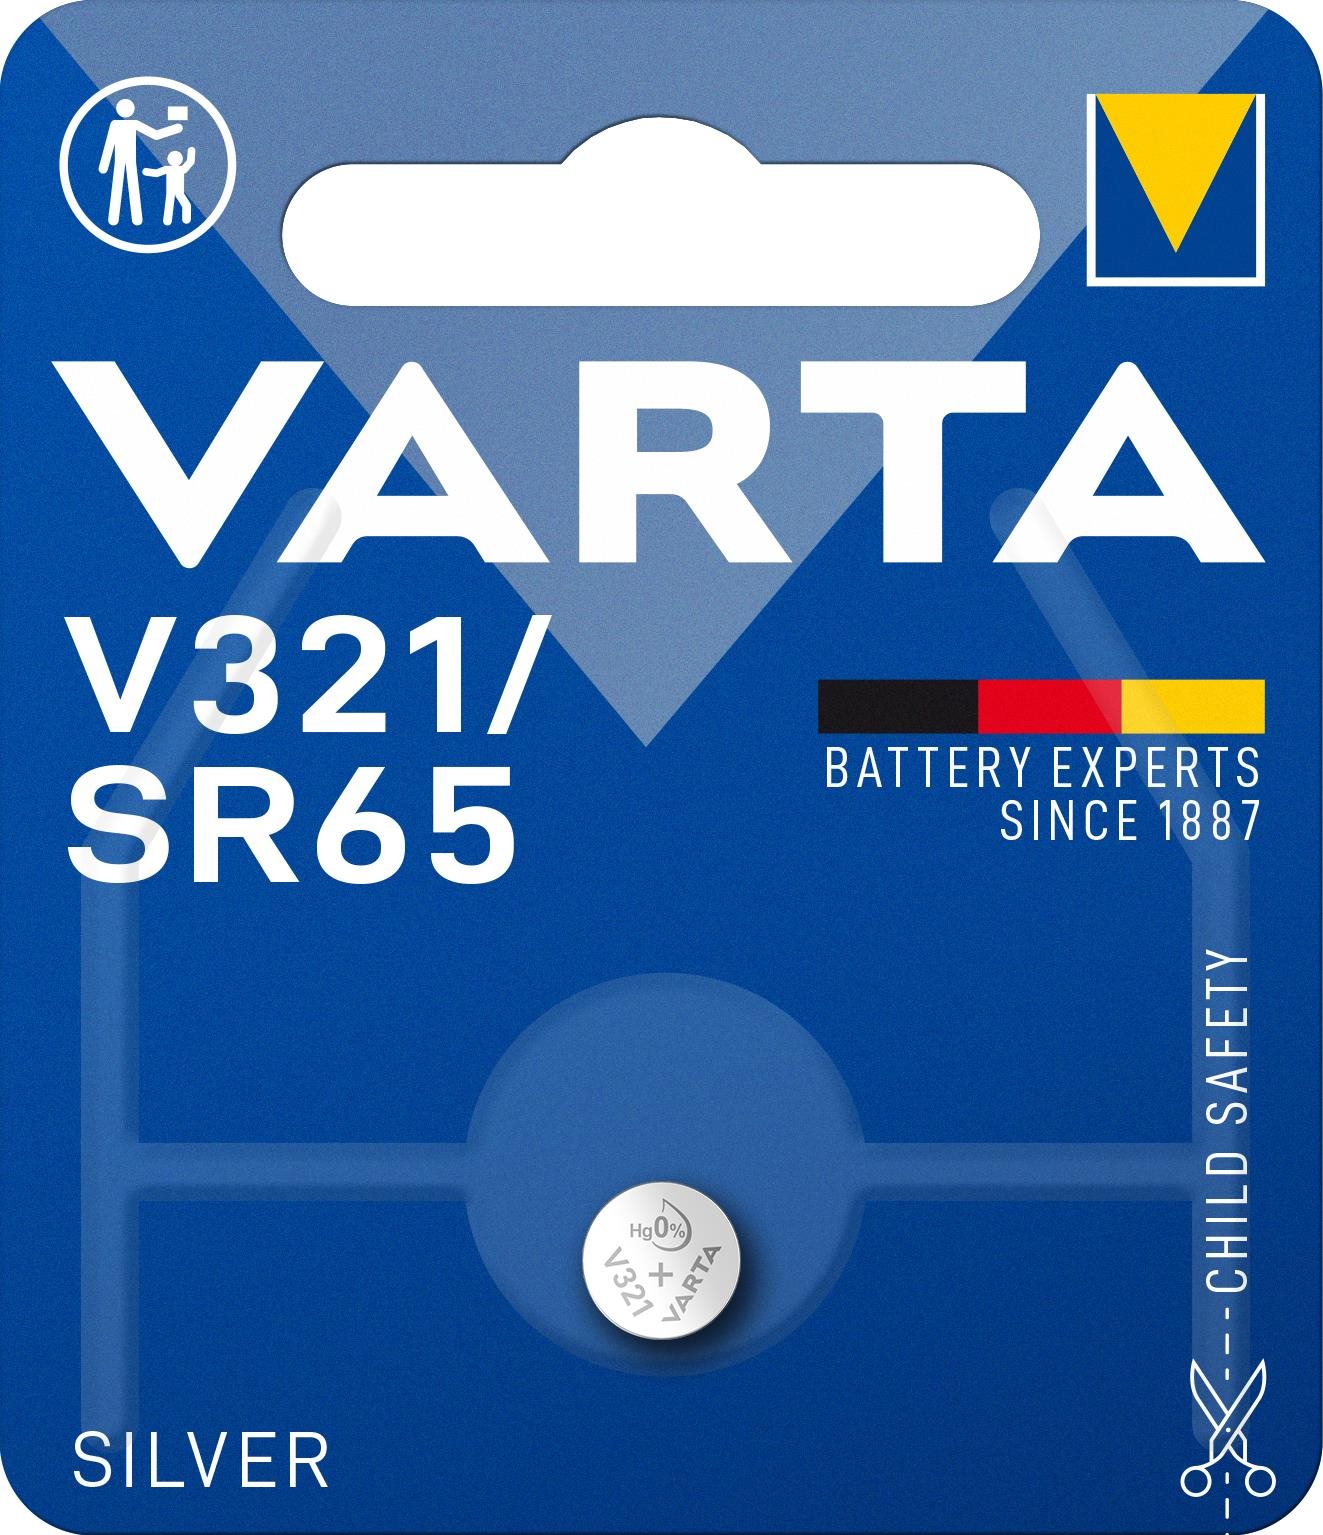 VARTA V321/SR65 Speciális ezüst-oxid elem - 1 db